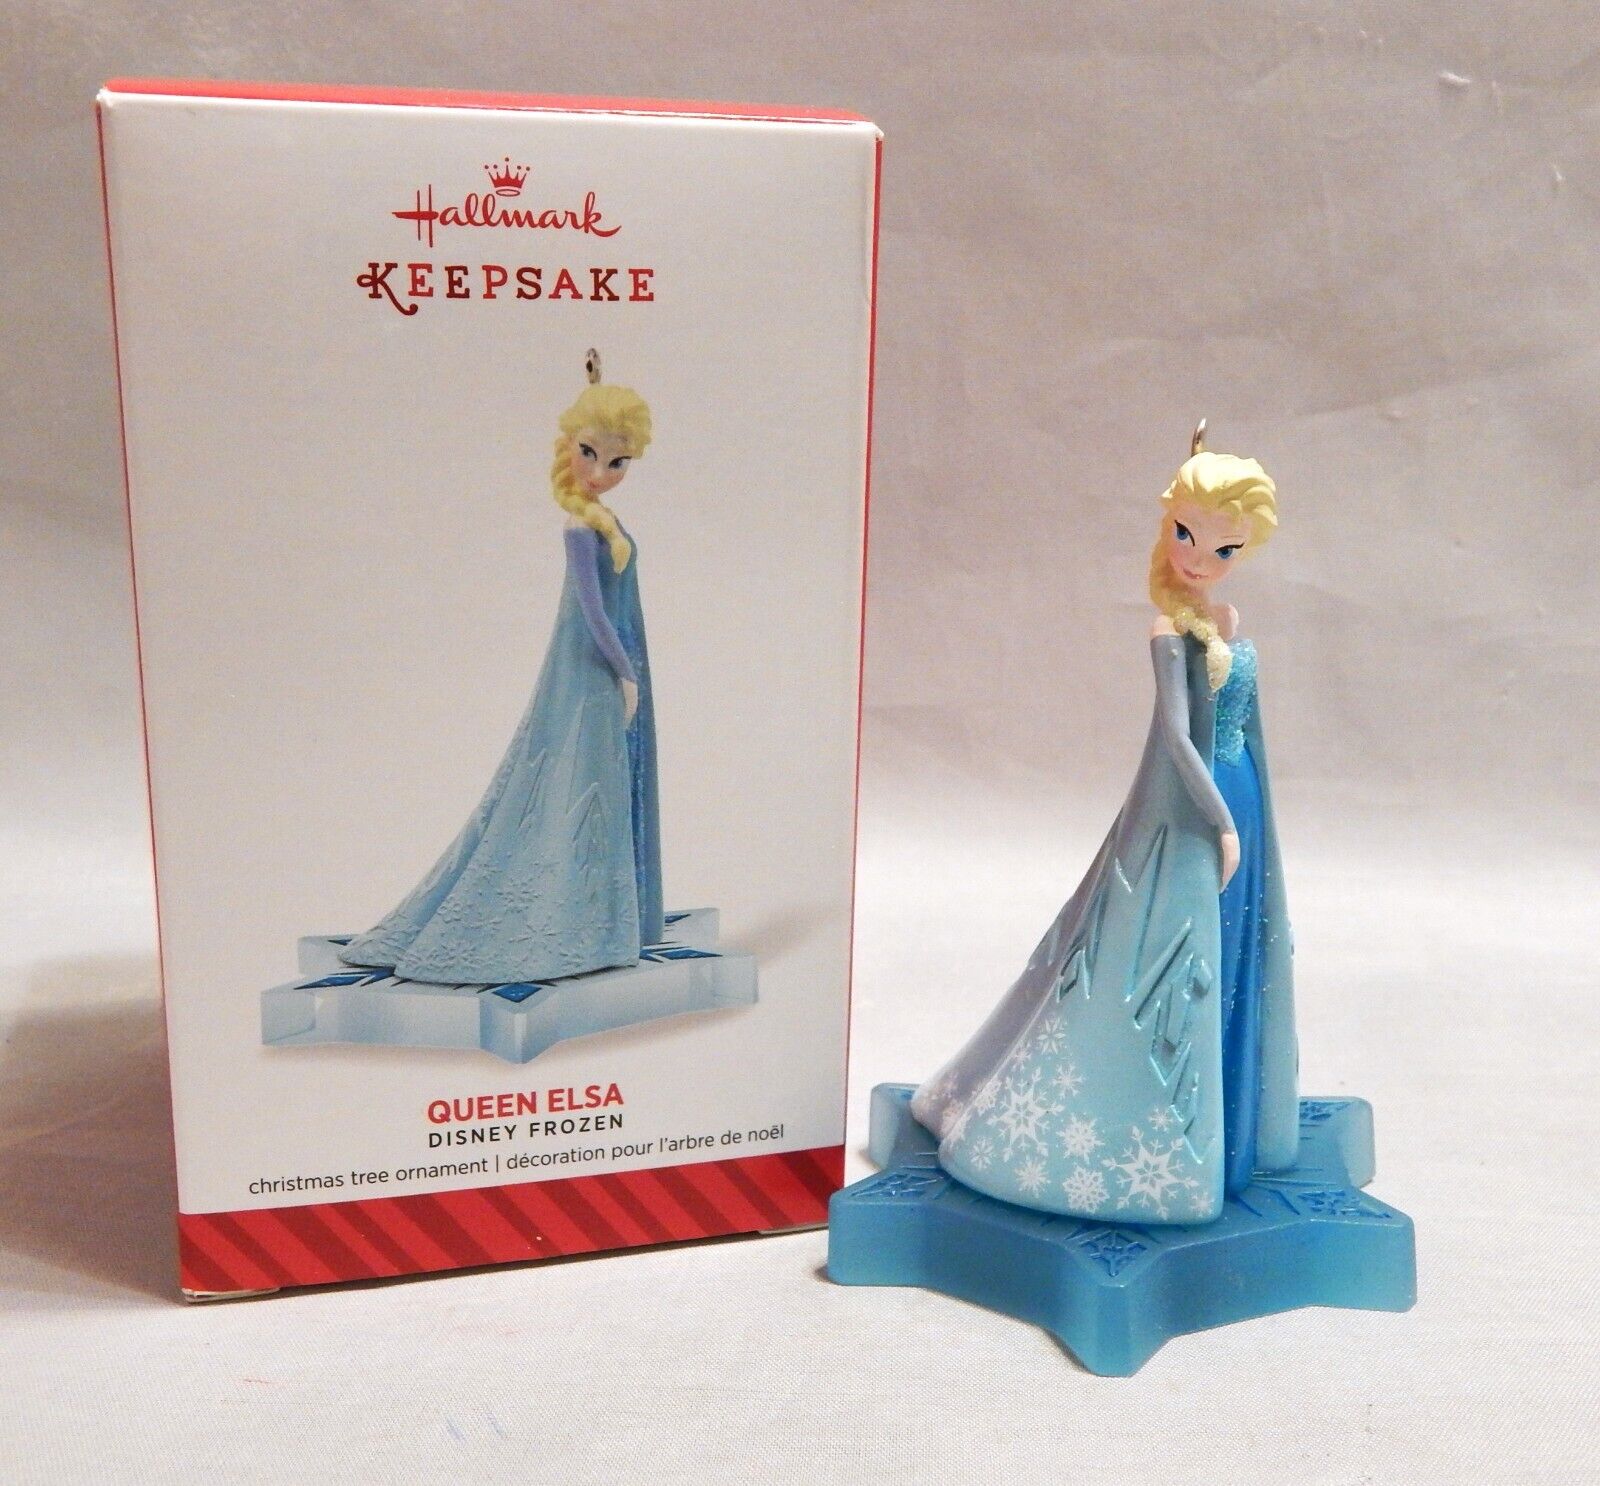 2014 Hallmark Keepsake Ornament Queen Elsa Disney Frozen